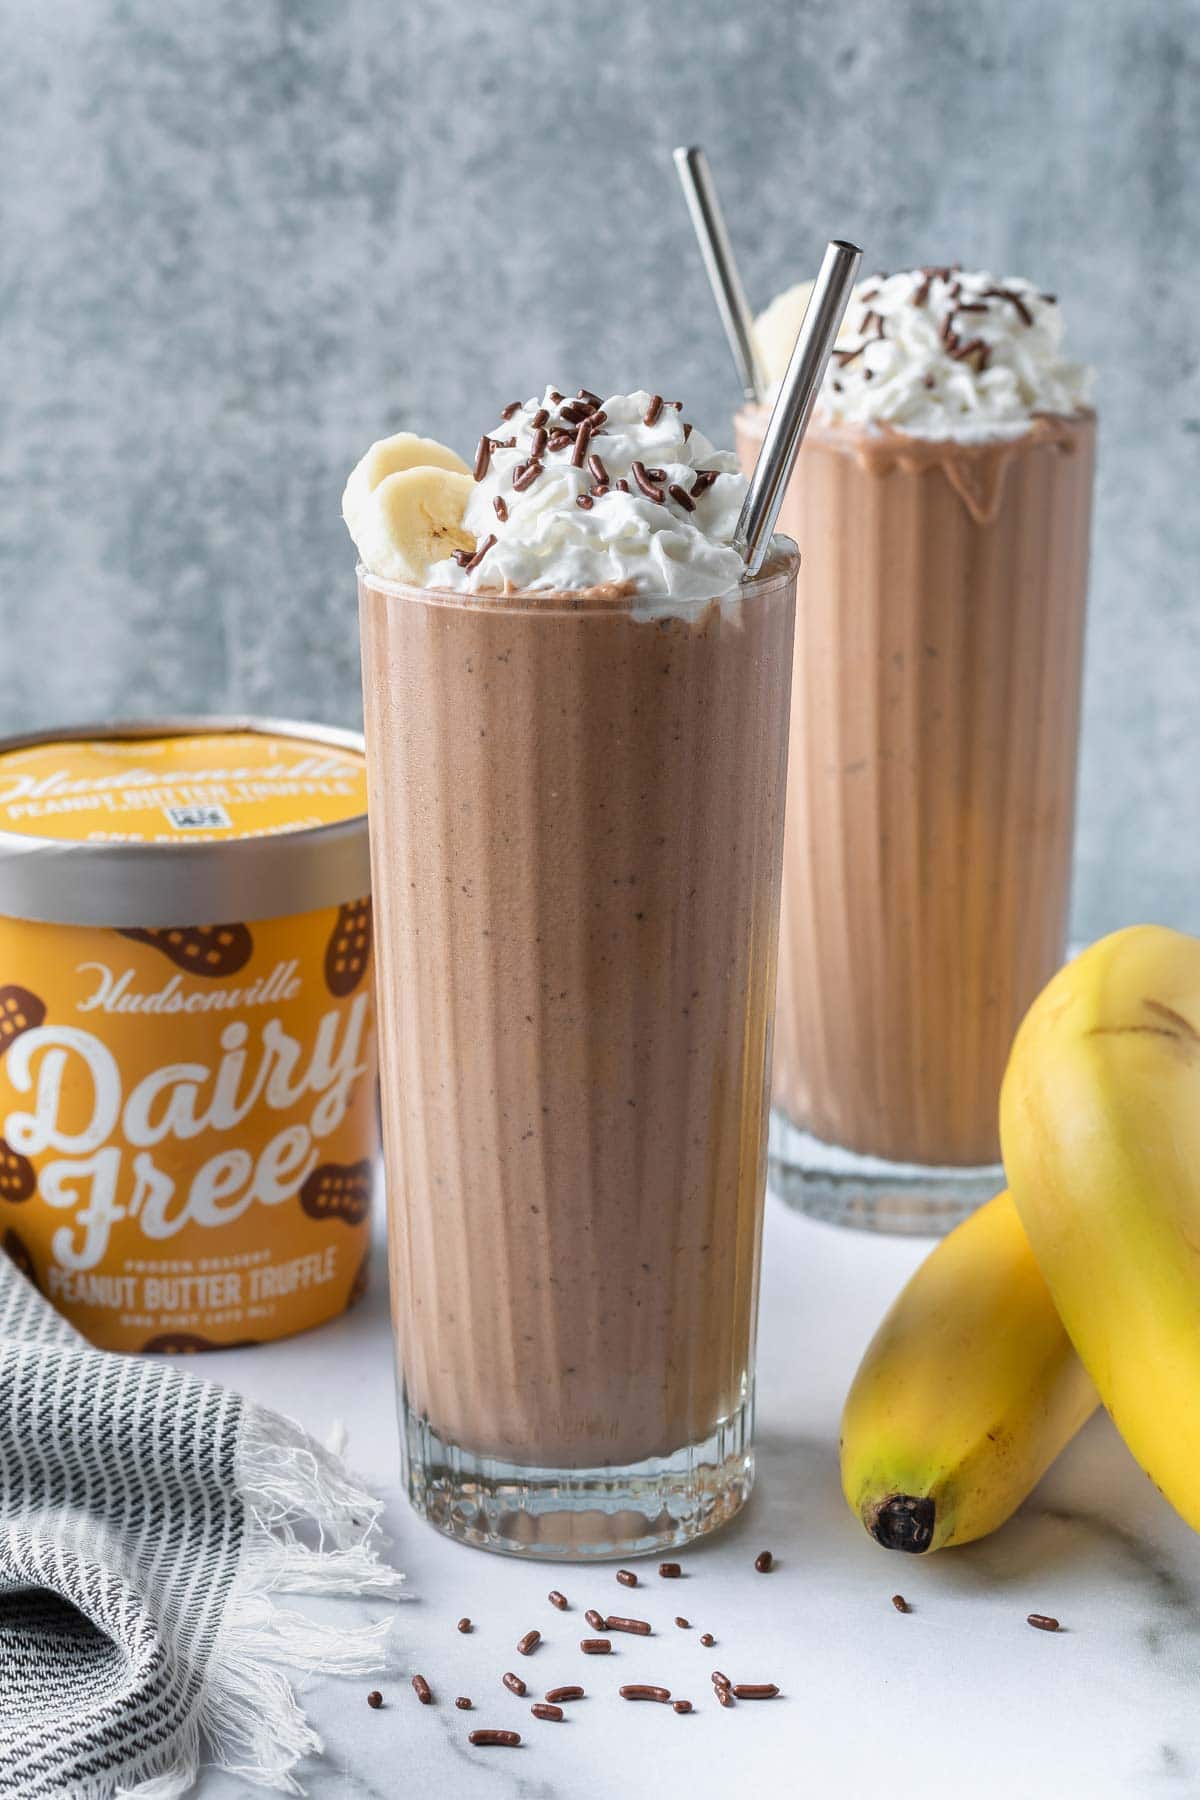 banana milkshakes made with dairy free peanut butter ice cream